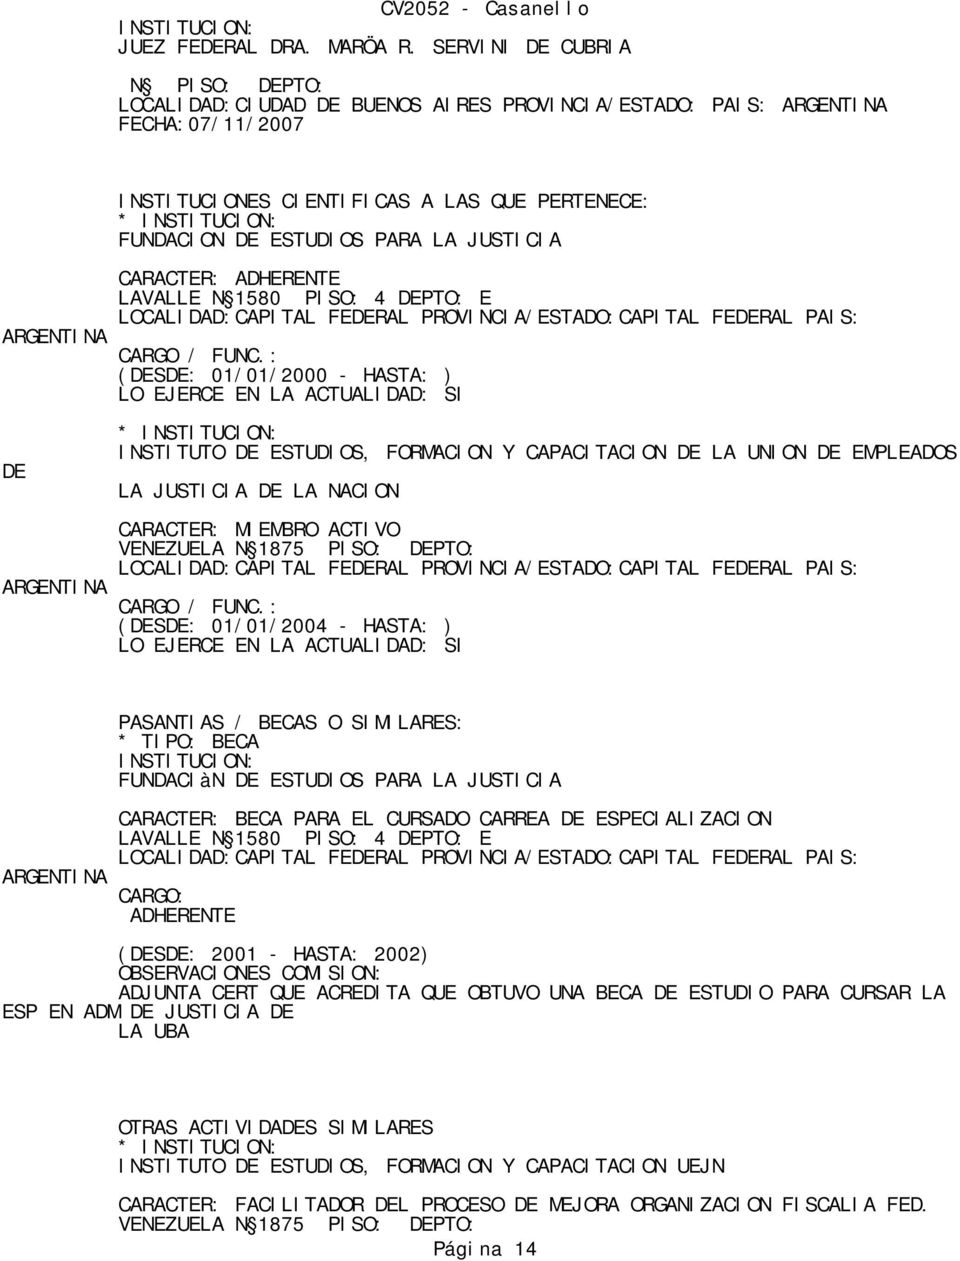 JUSTICIA ARGENTINA DE CARACTER: ADHERENTE LAVALLE N 1580 PISO: 4 DEPTO: E LOCALIDAD: PROVINCIA/ESTADO: PAIS: CARGO / FUNC.